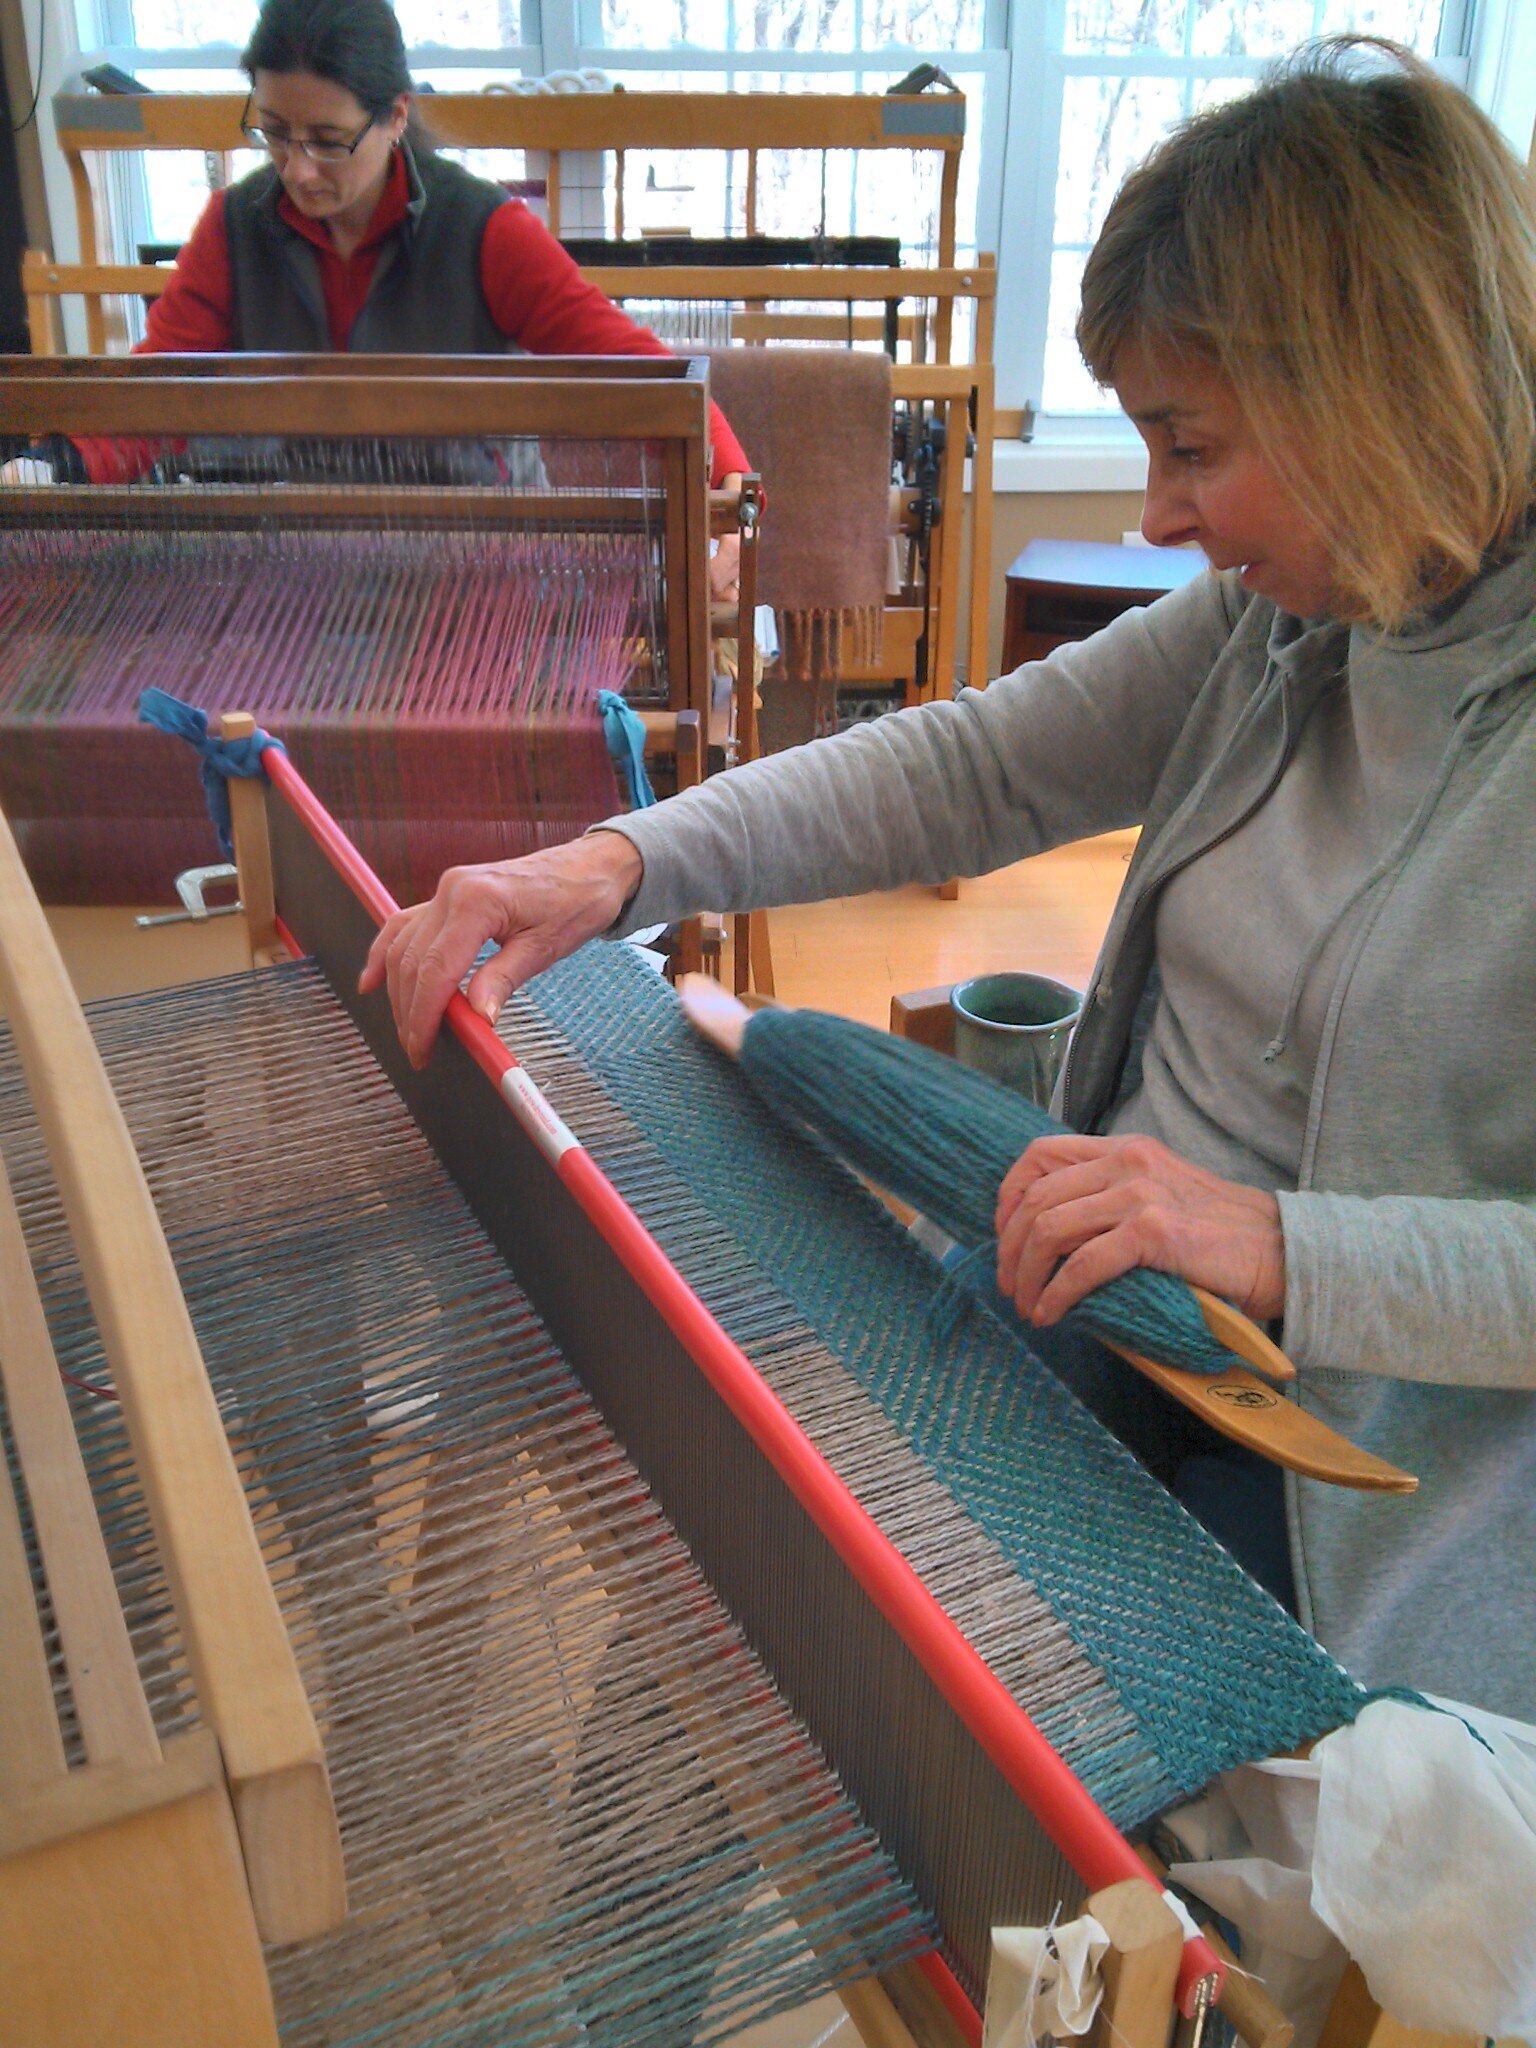 Weaving Yarn by Stocksy Contributor THEFUNKSHIP - Stocksy